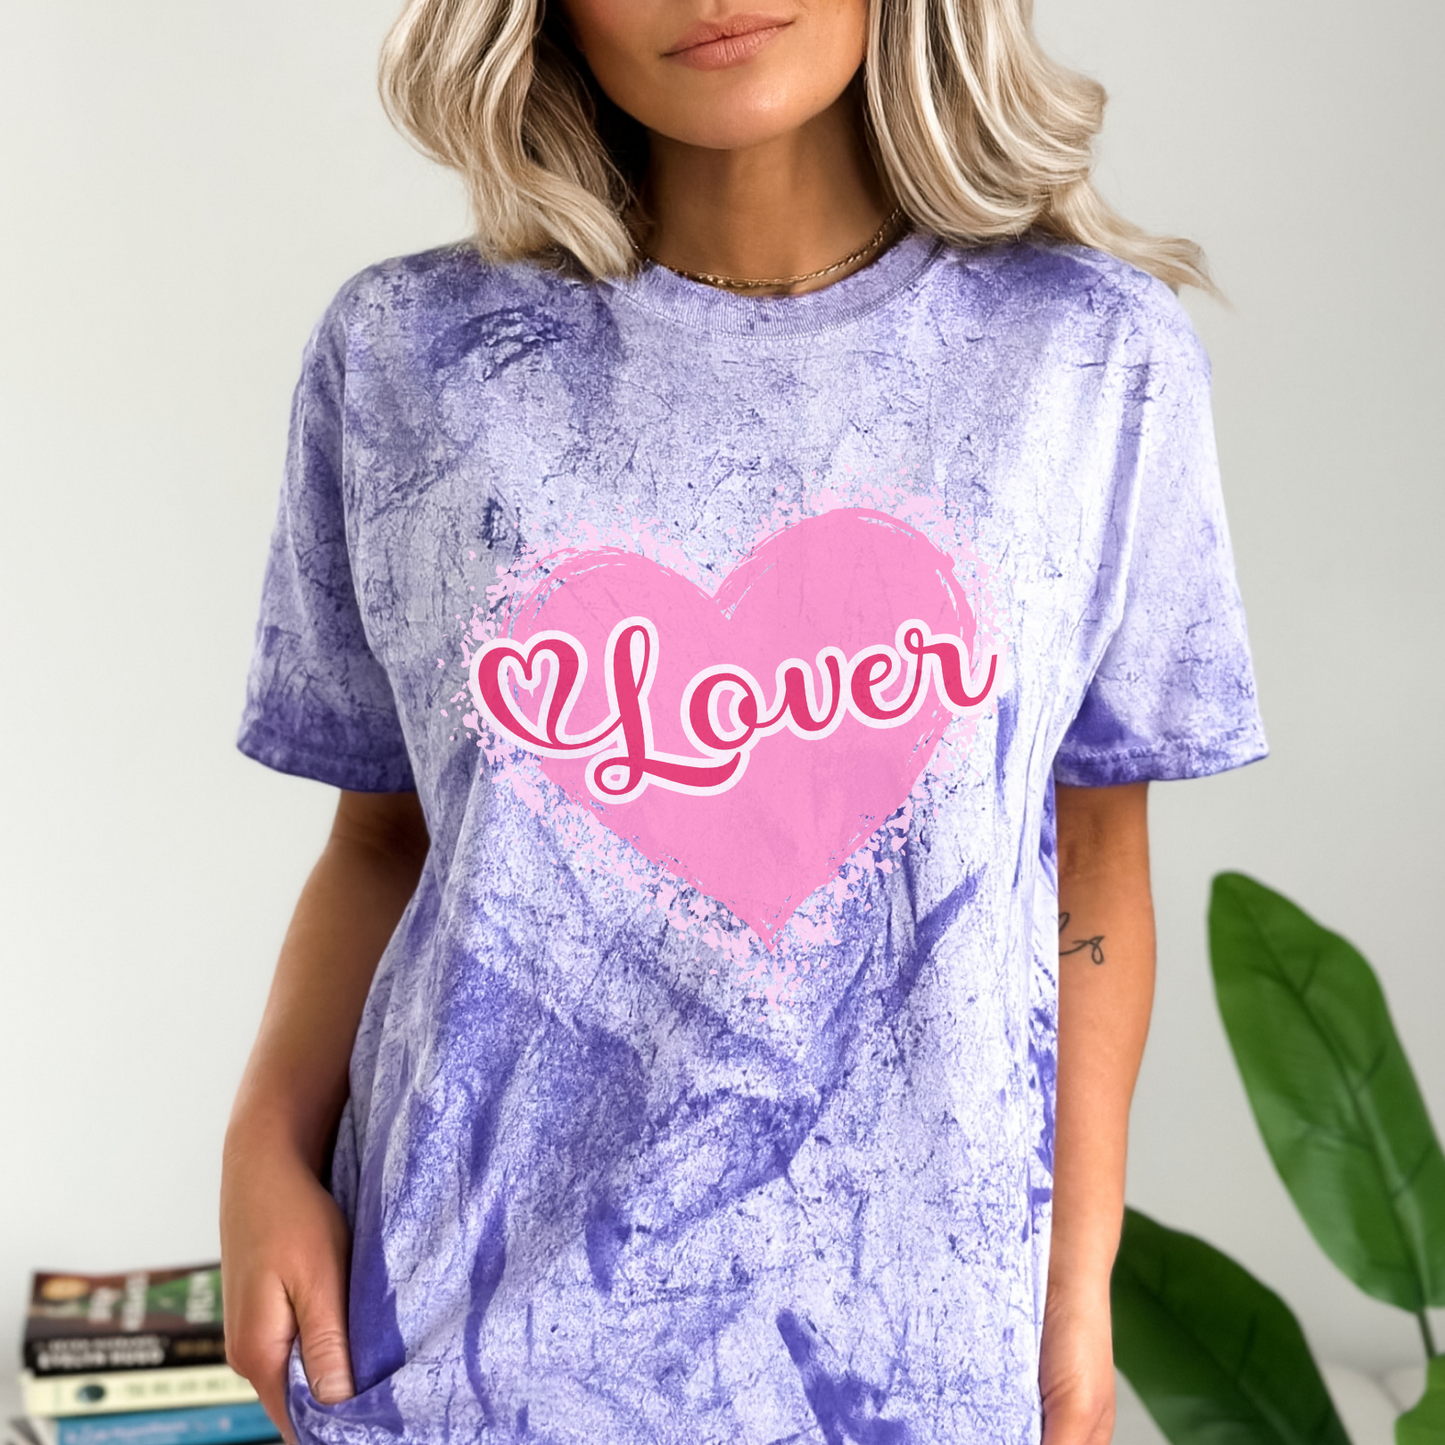 Lover - Tie Dye T-Shirt